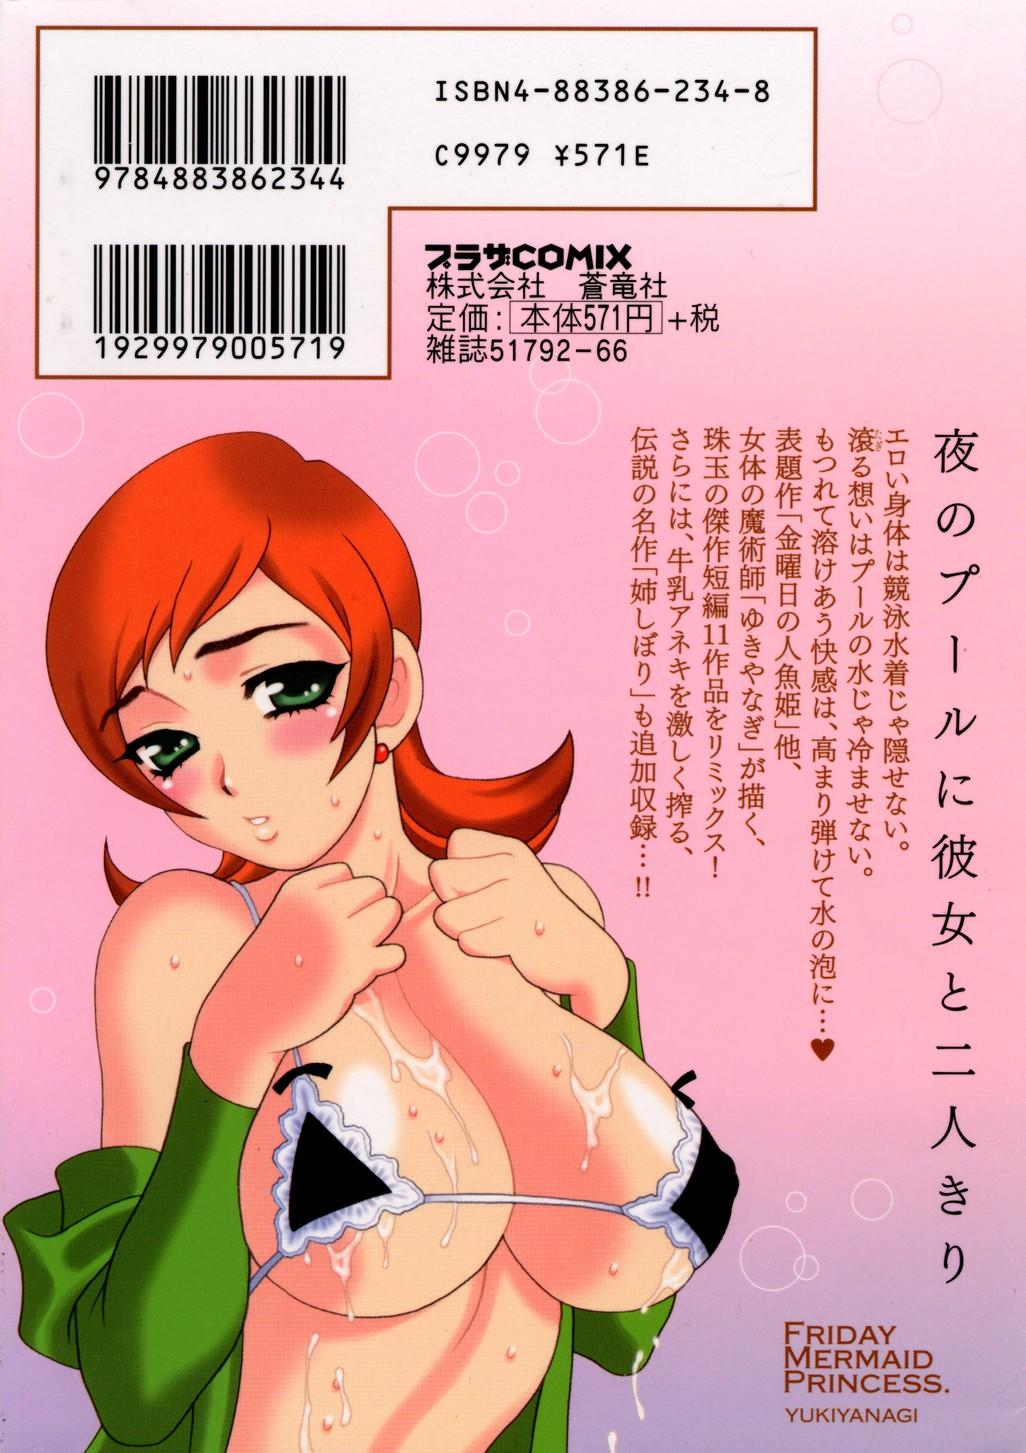 Club Kinyoubi no Ningyohime - Friday Mermaid Princess Bikini - Picture 2